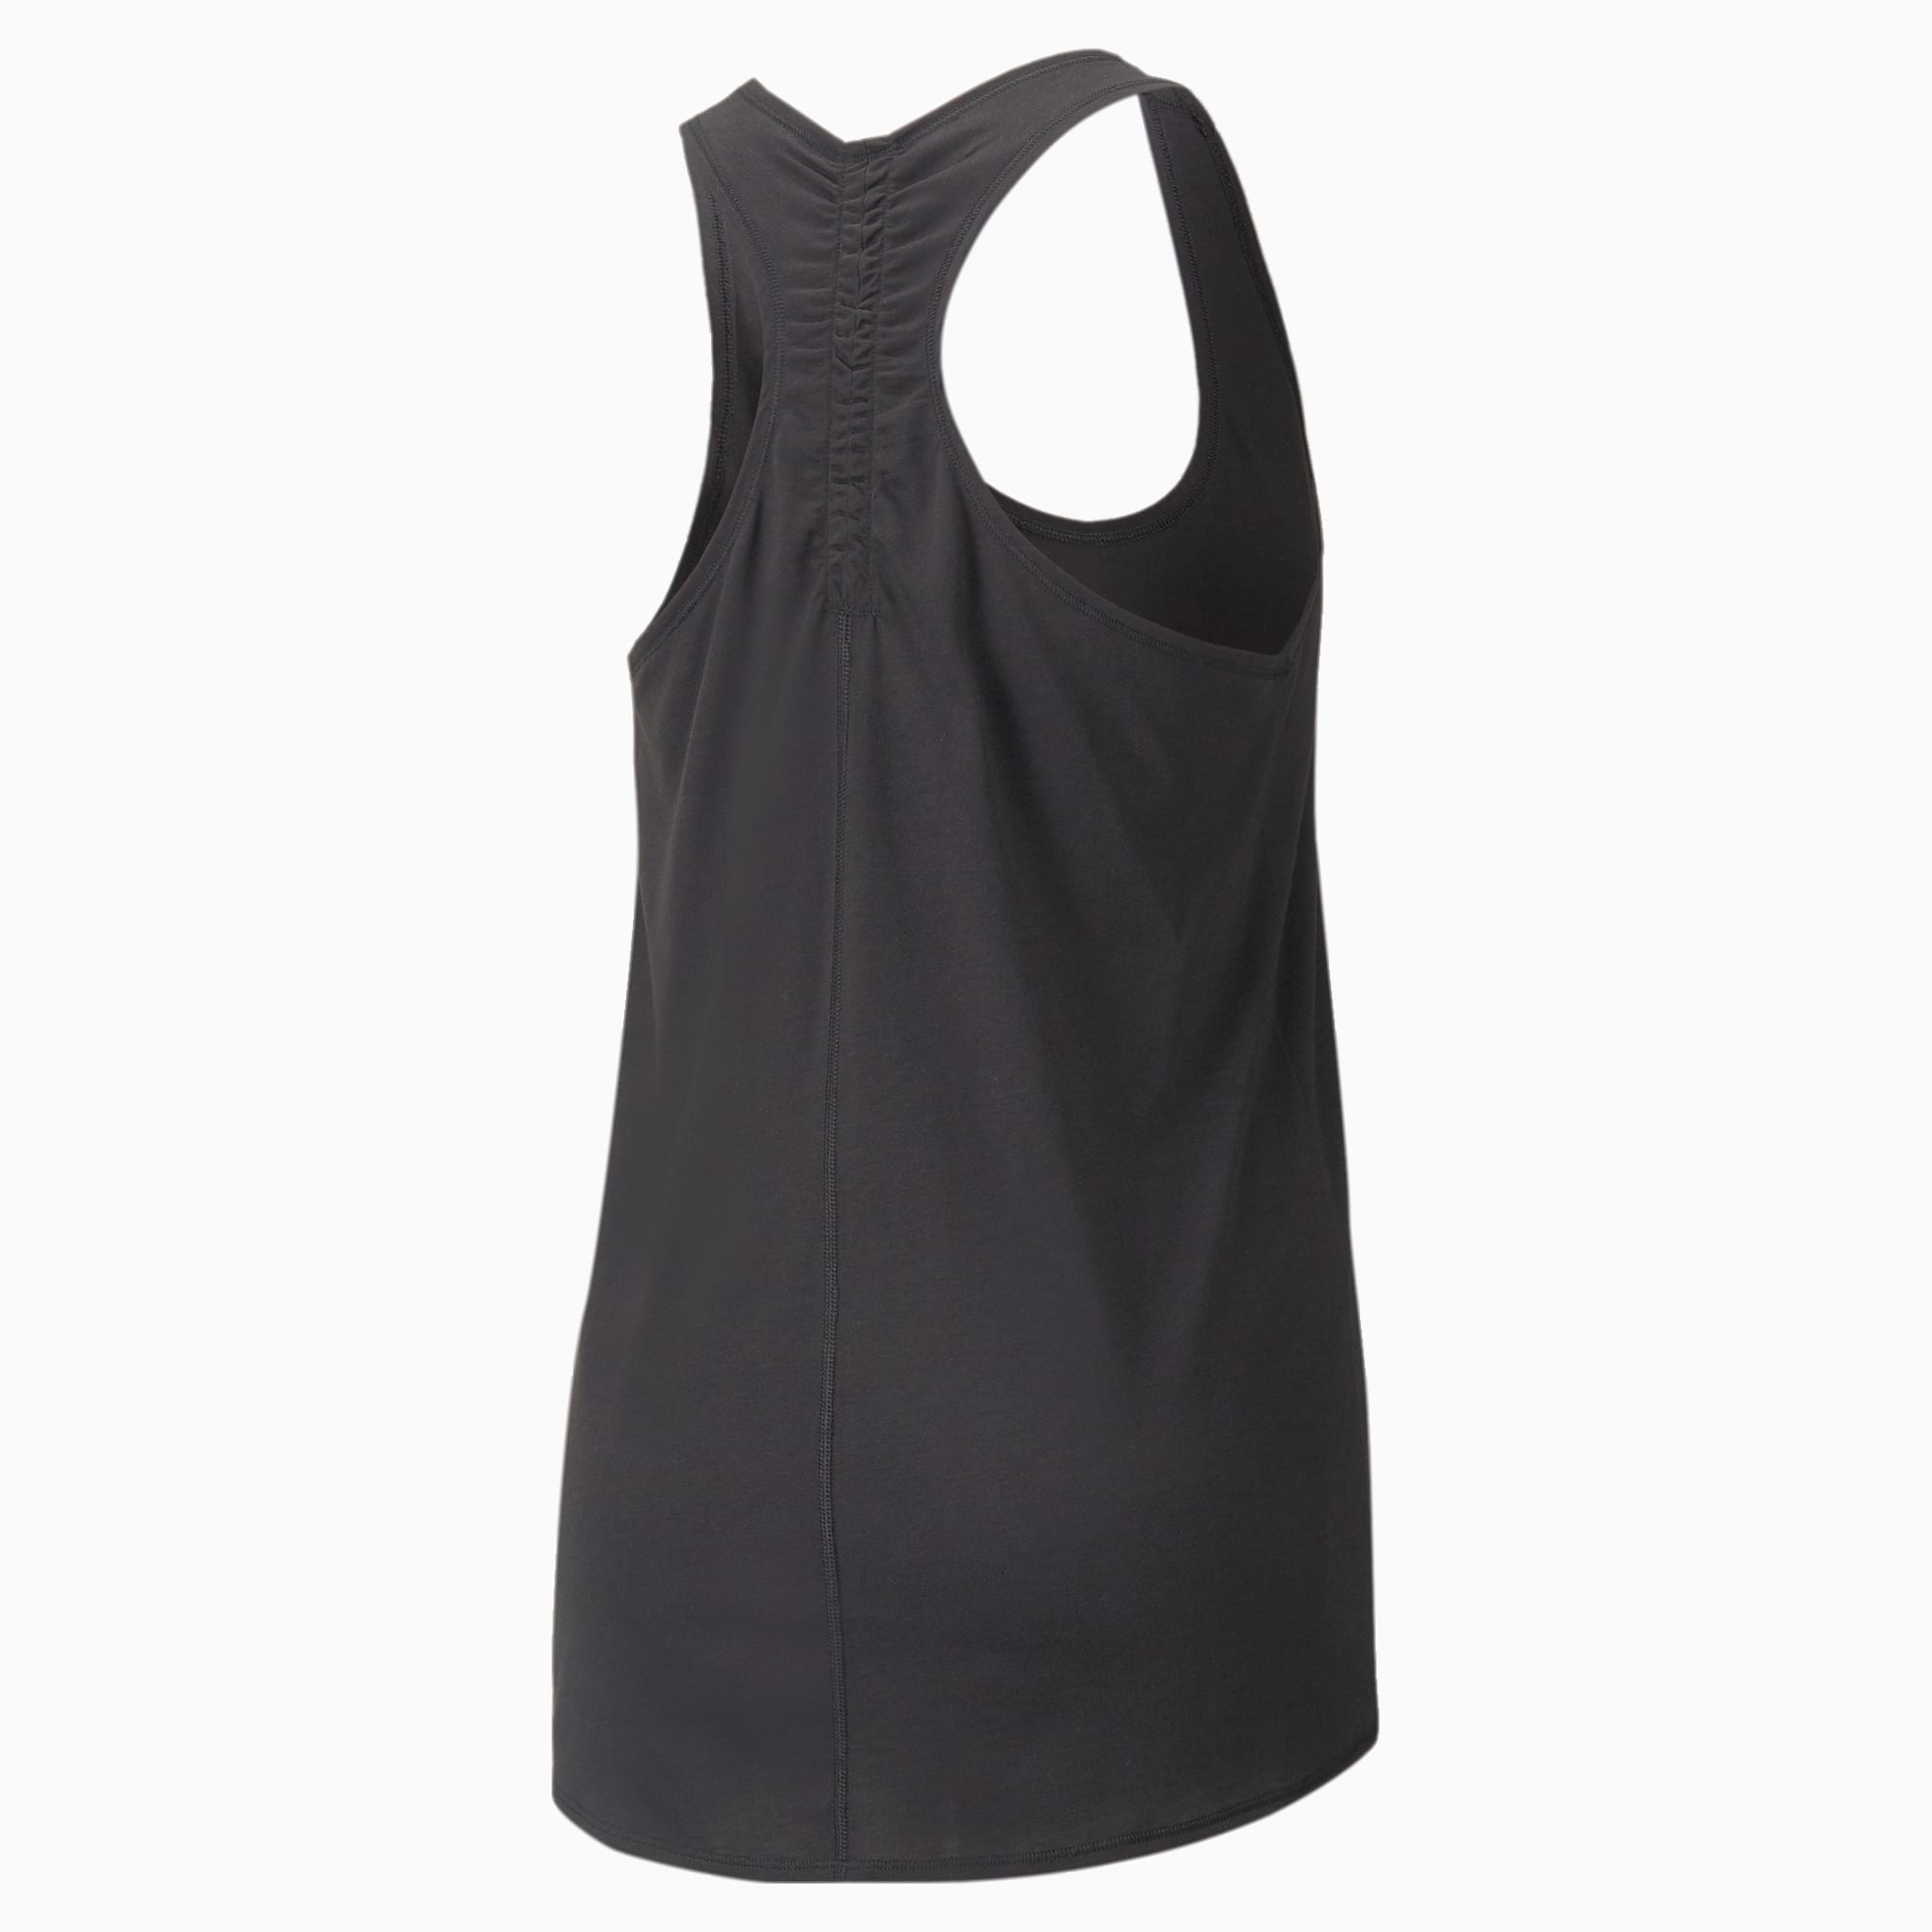 PUMA Studio Foundation Relax Women's Training Tank Top Shirt, Black, Size XL, Clothing